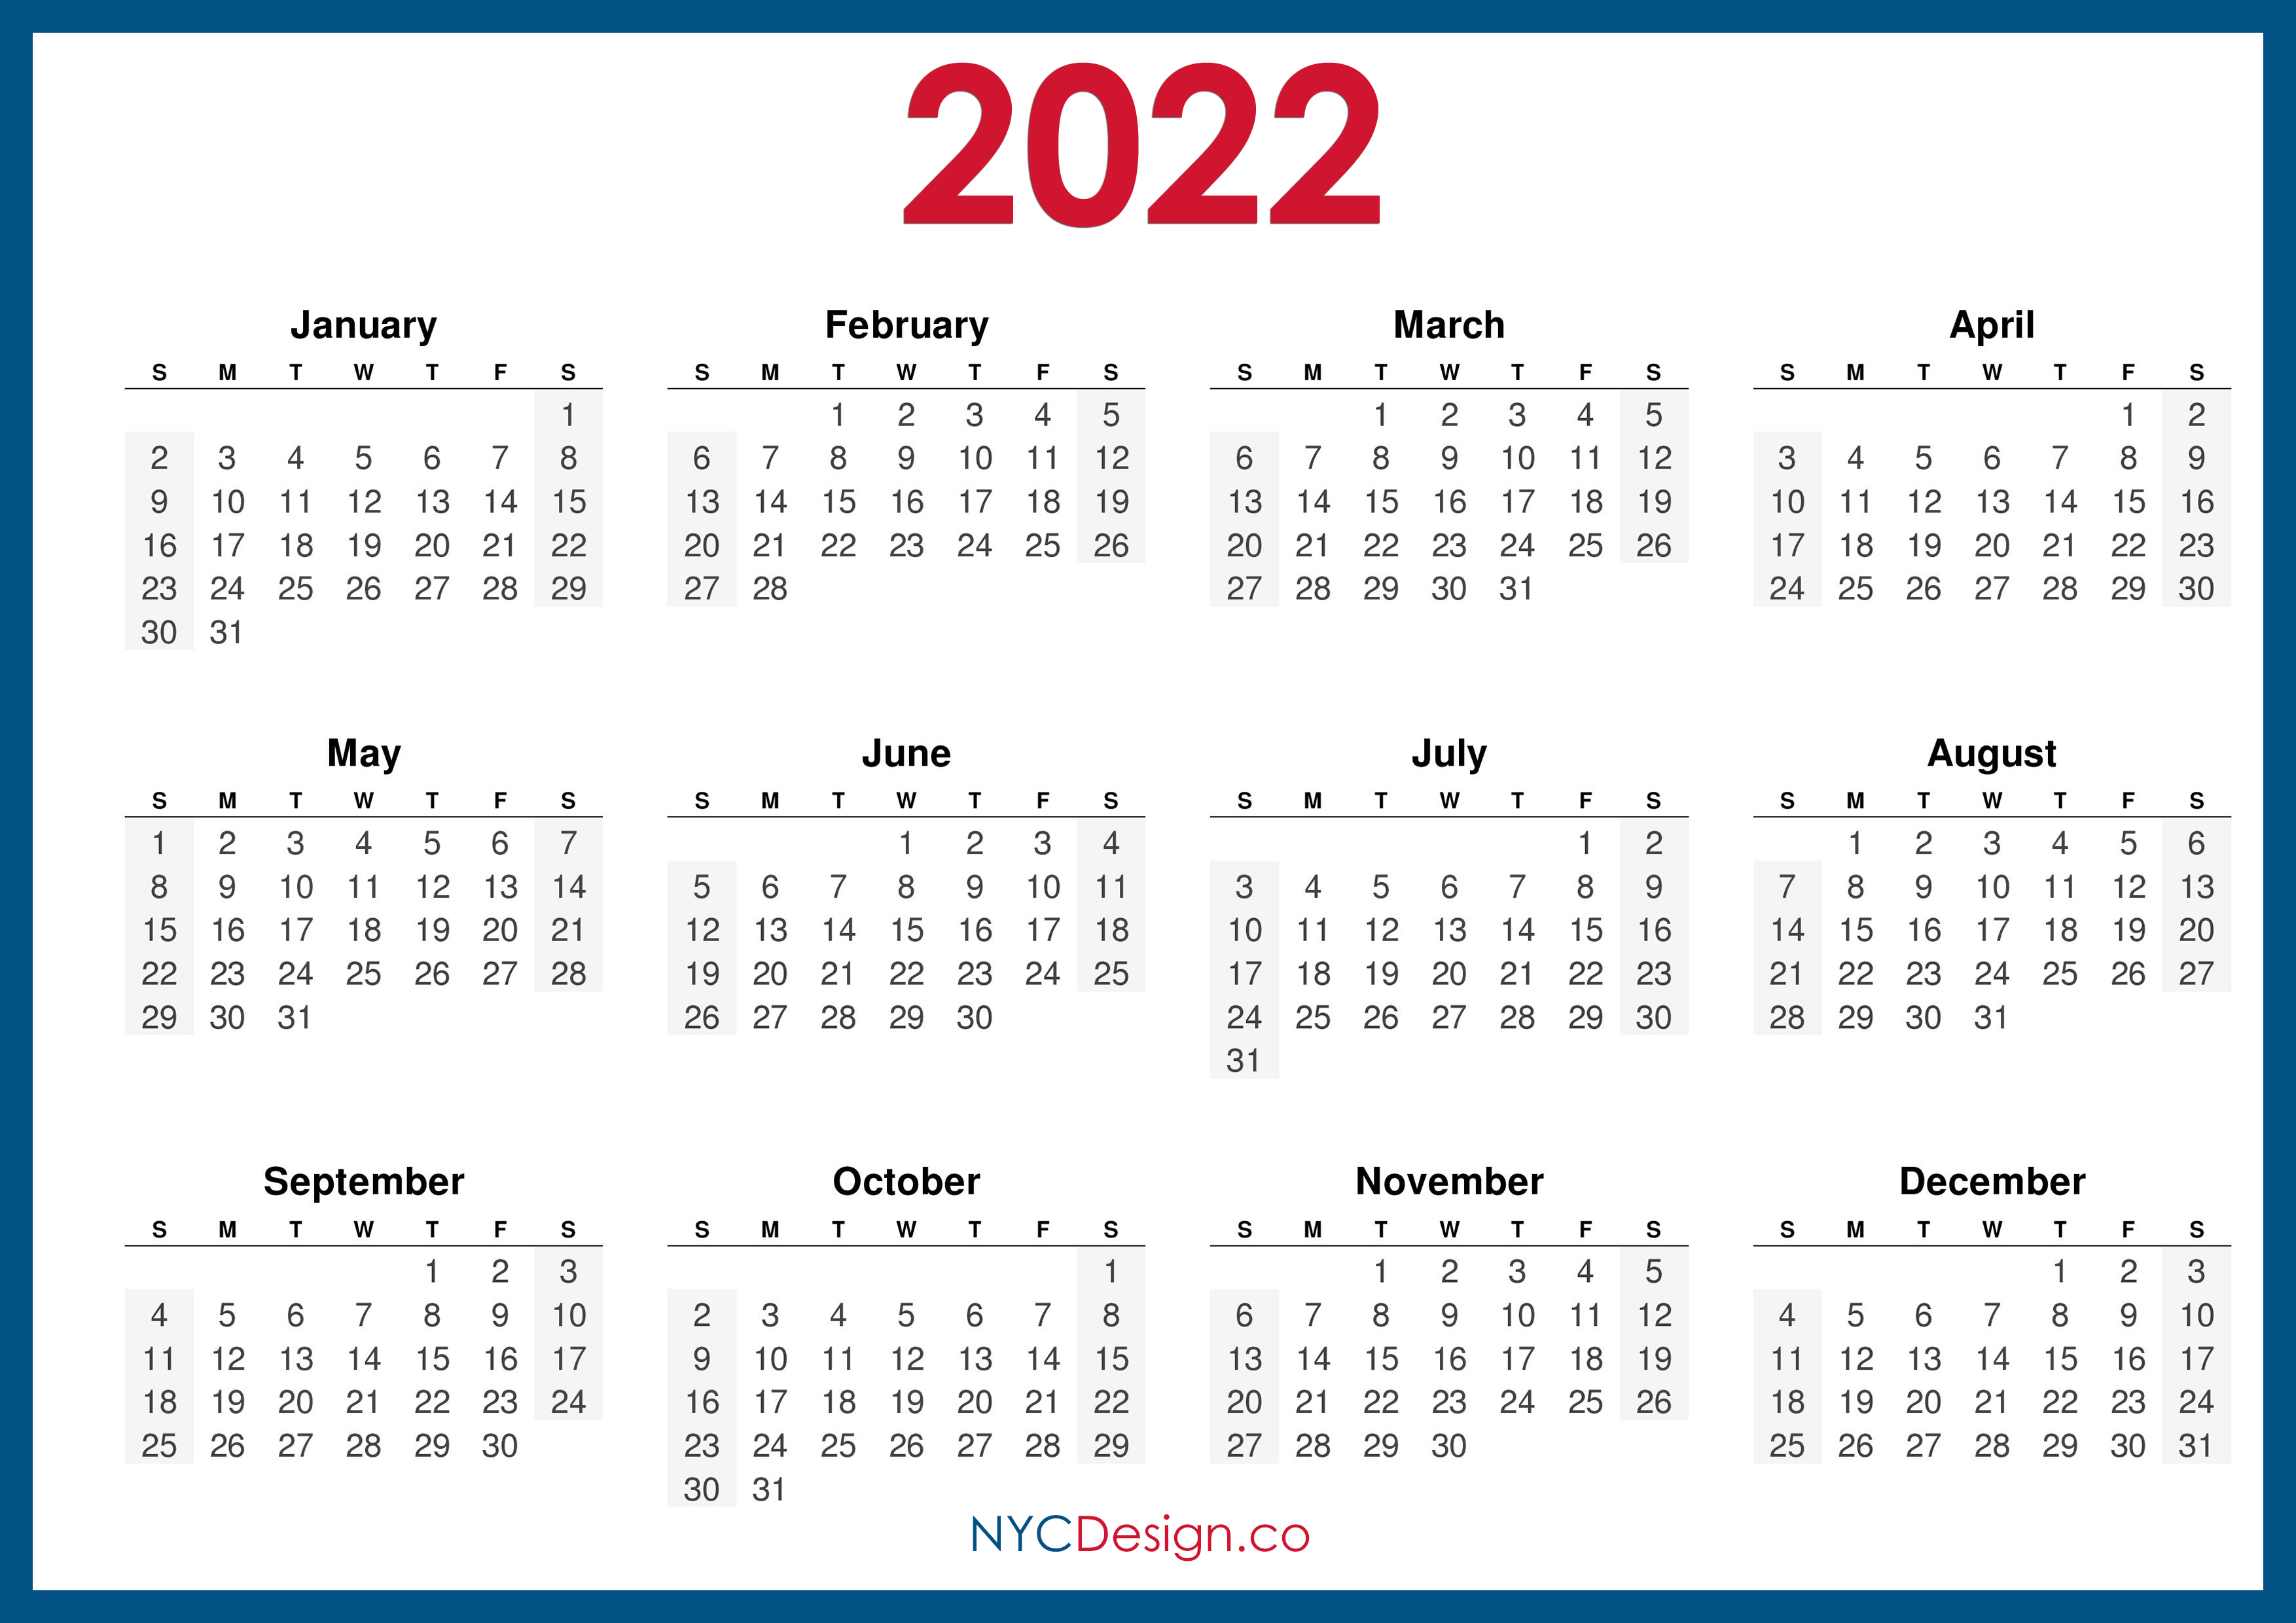 2022 calendar free download